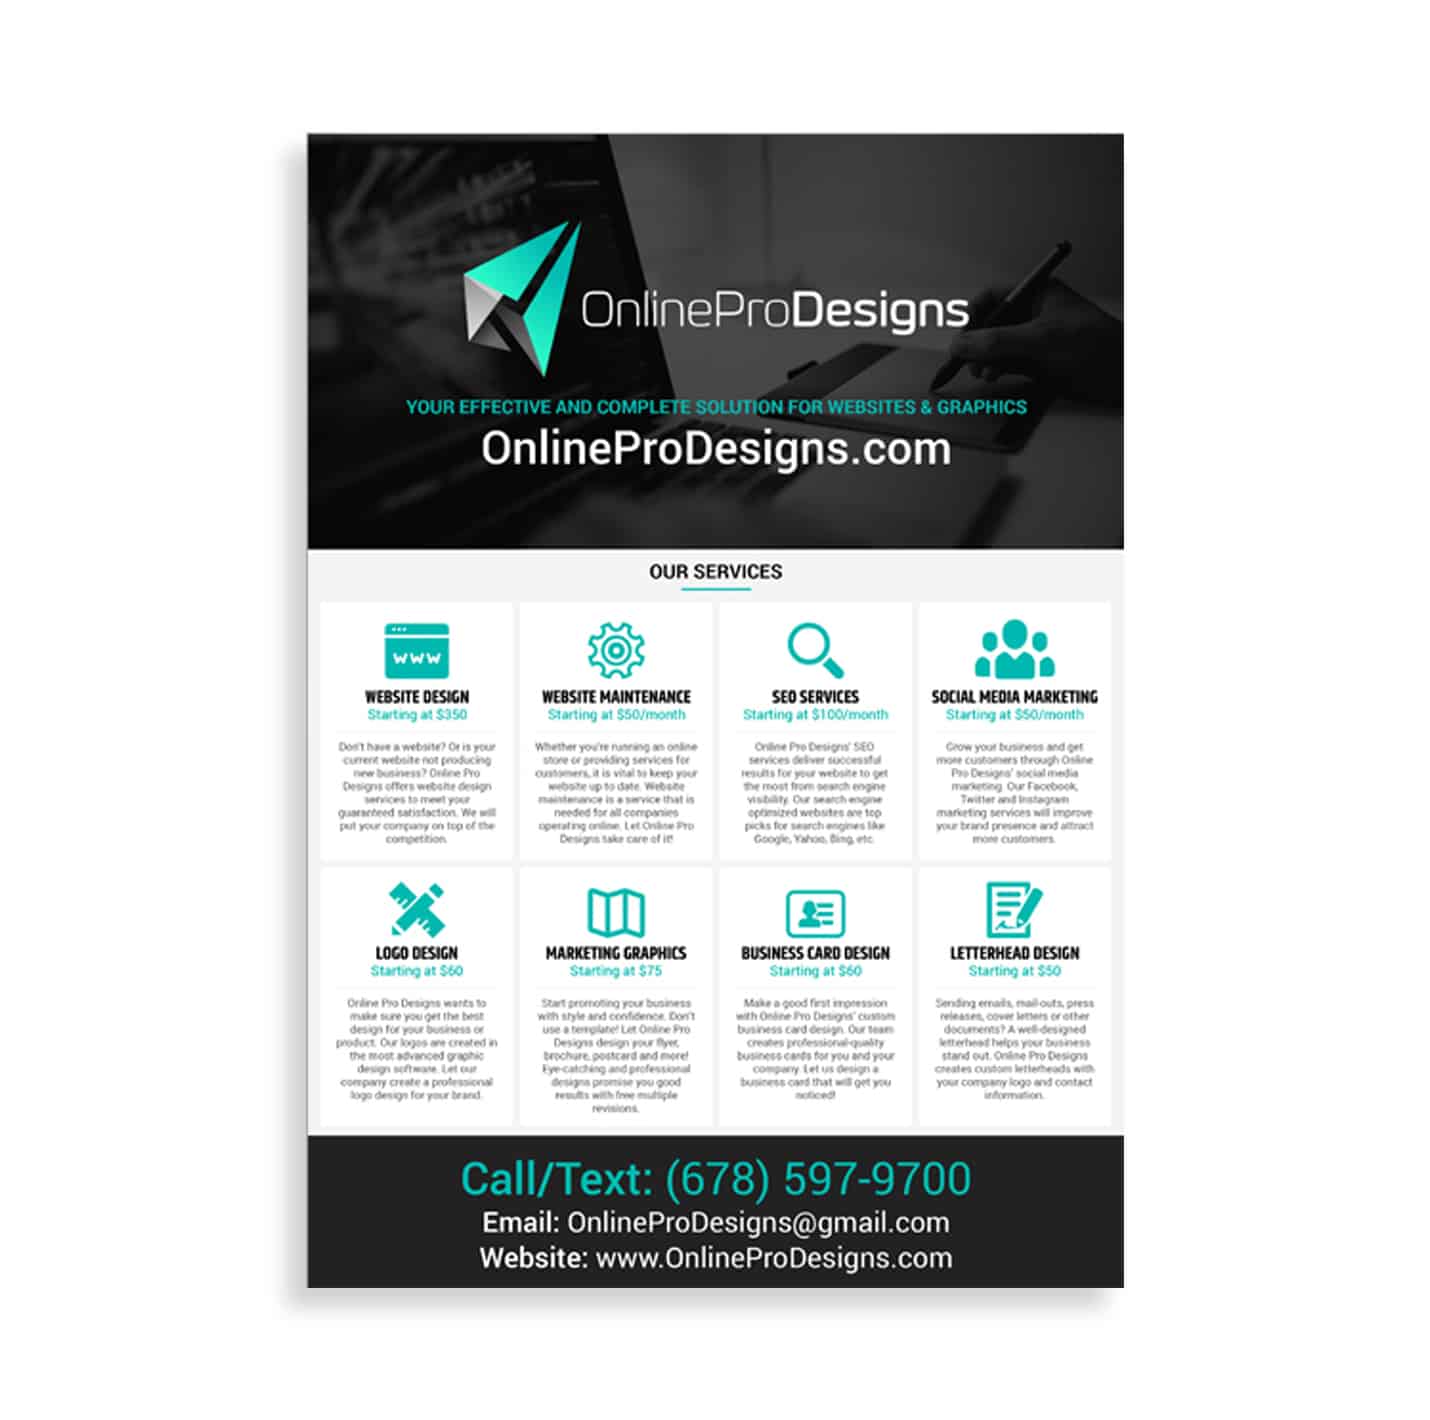 Online Pro Designs Banner | Logo Design By Online Pro Designs Atlanta GA | Marketing Graphics By Online Pro Designs Atlanta GA | Graphic Design By Online Pro Designs Atlanta GA | Online Company Based In Atlanta GA